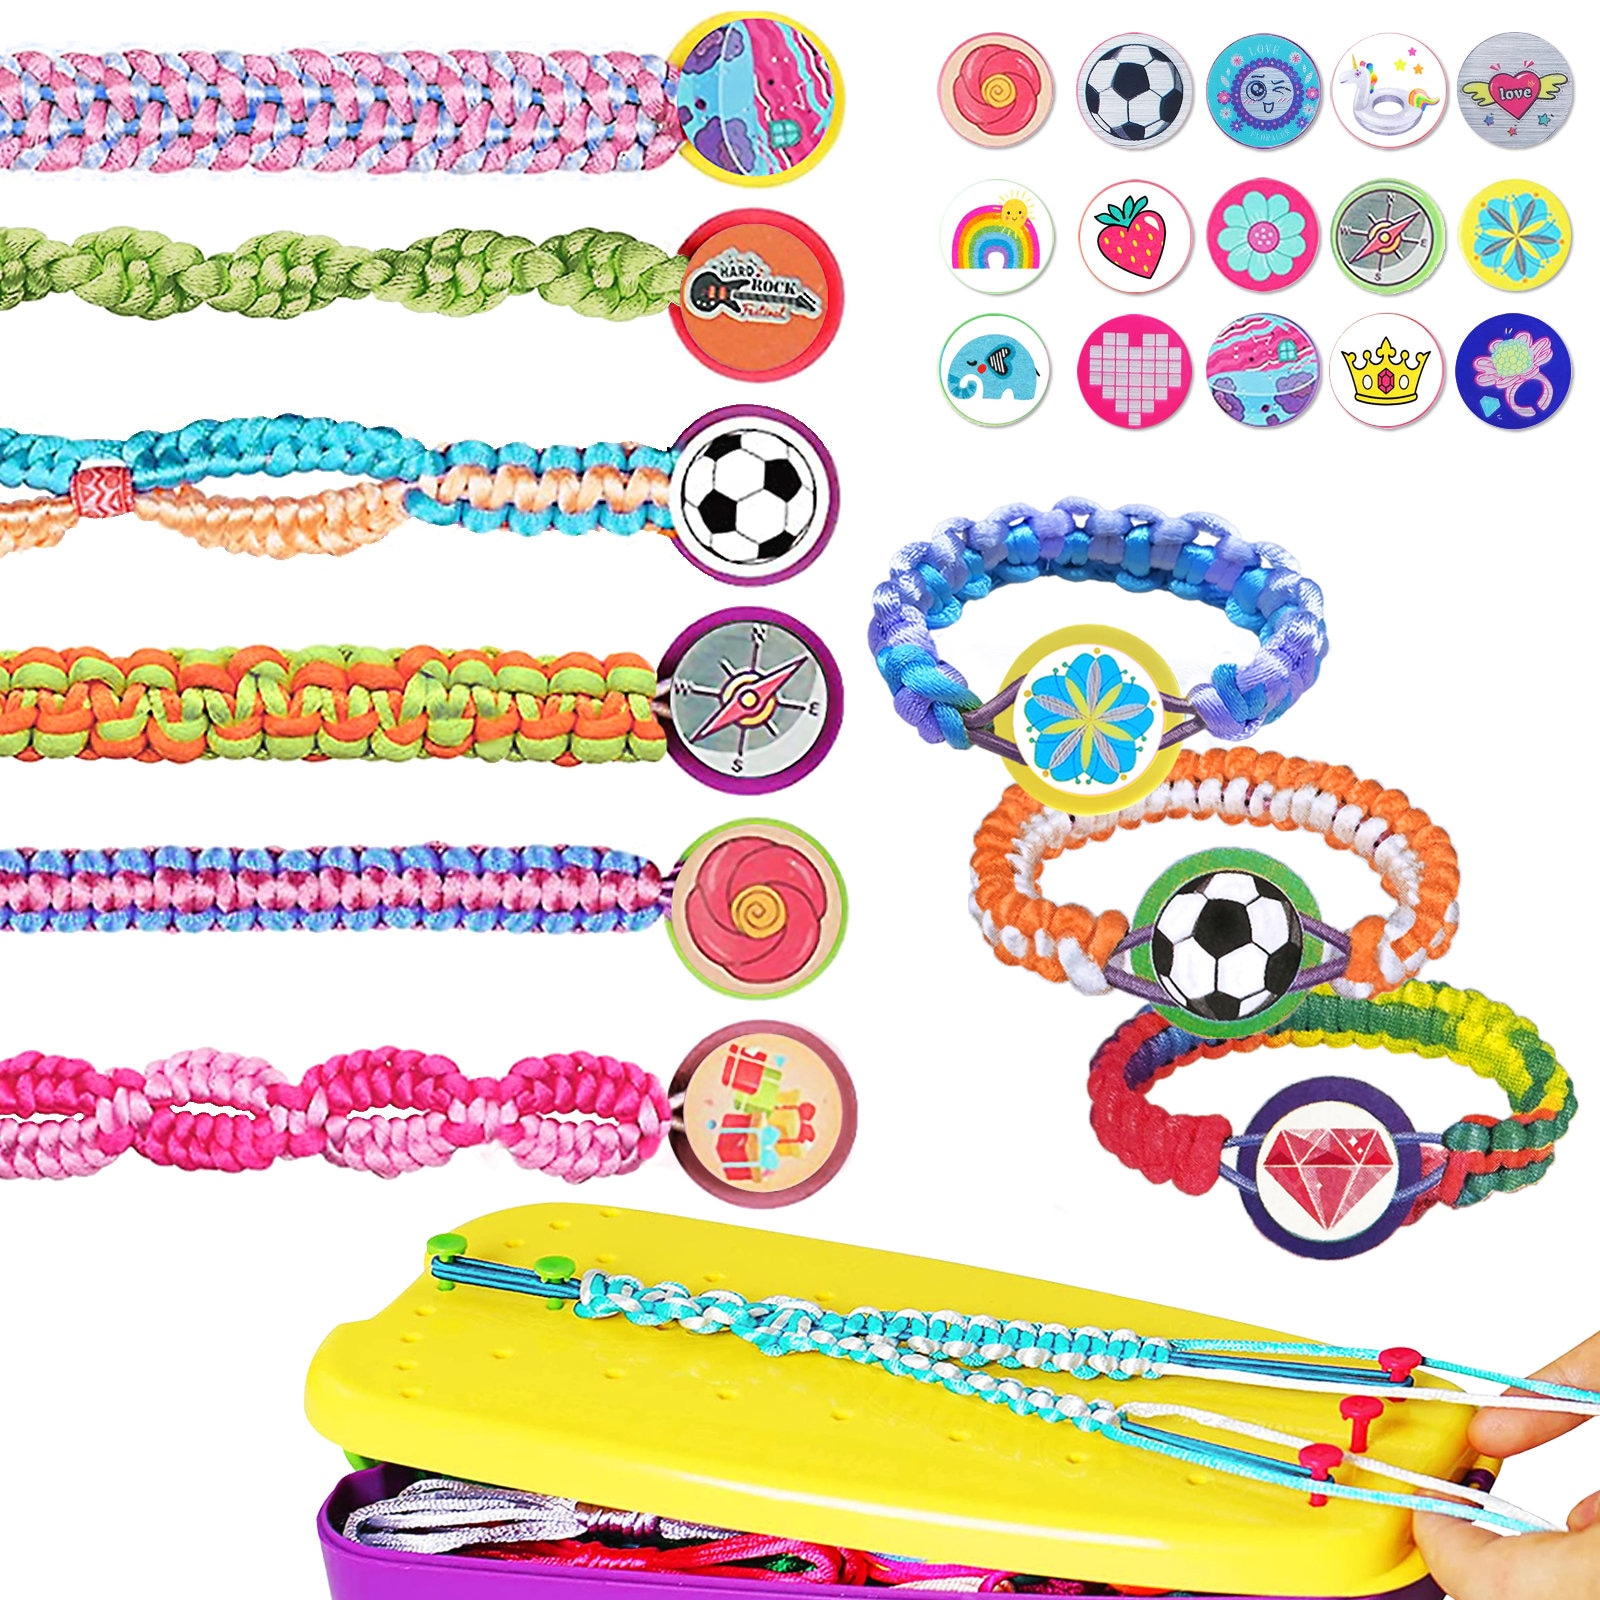 VERTOY Friendship Bracelet Making Kit for Girls - Cool Arts and